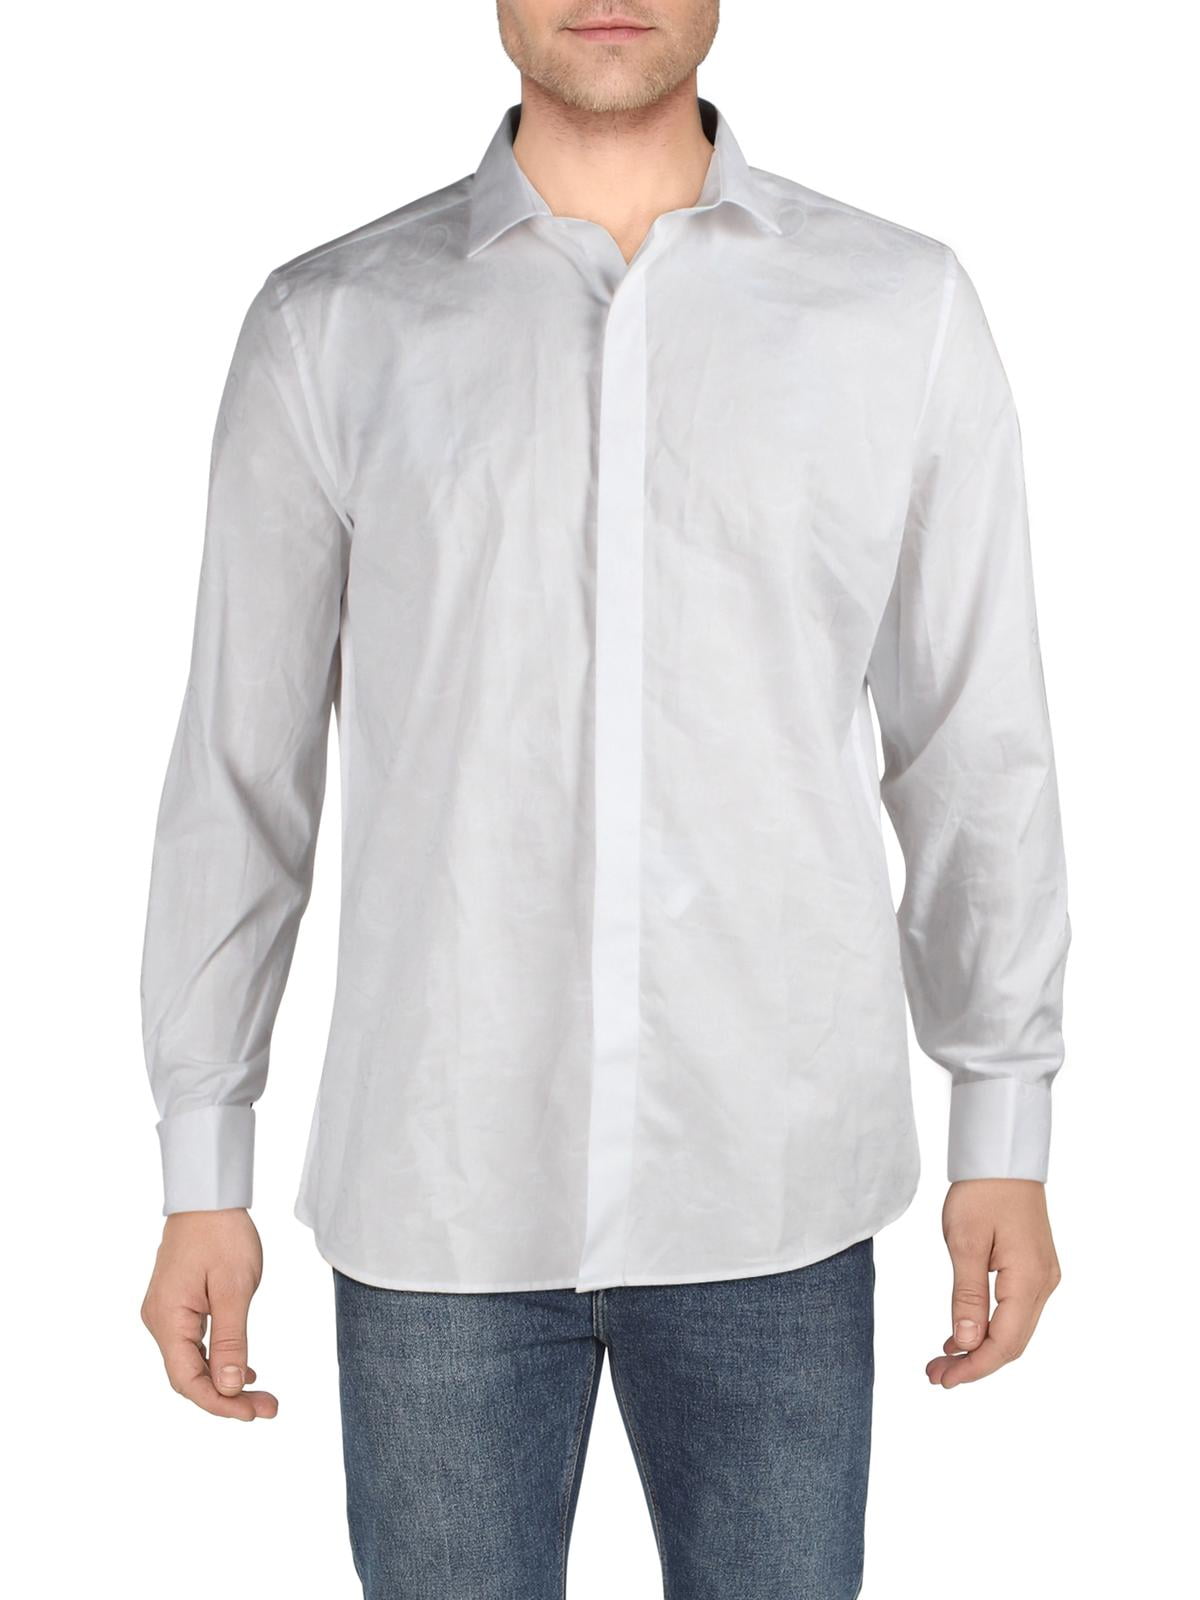 Damipow Mens Dress Shirts Wrinkle Free Bamboo Fiber Long Sleeve Casual Button Down Shirt 